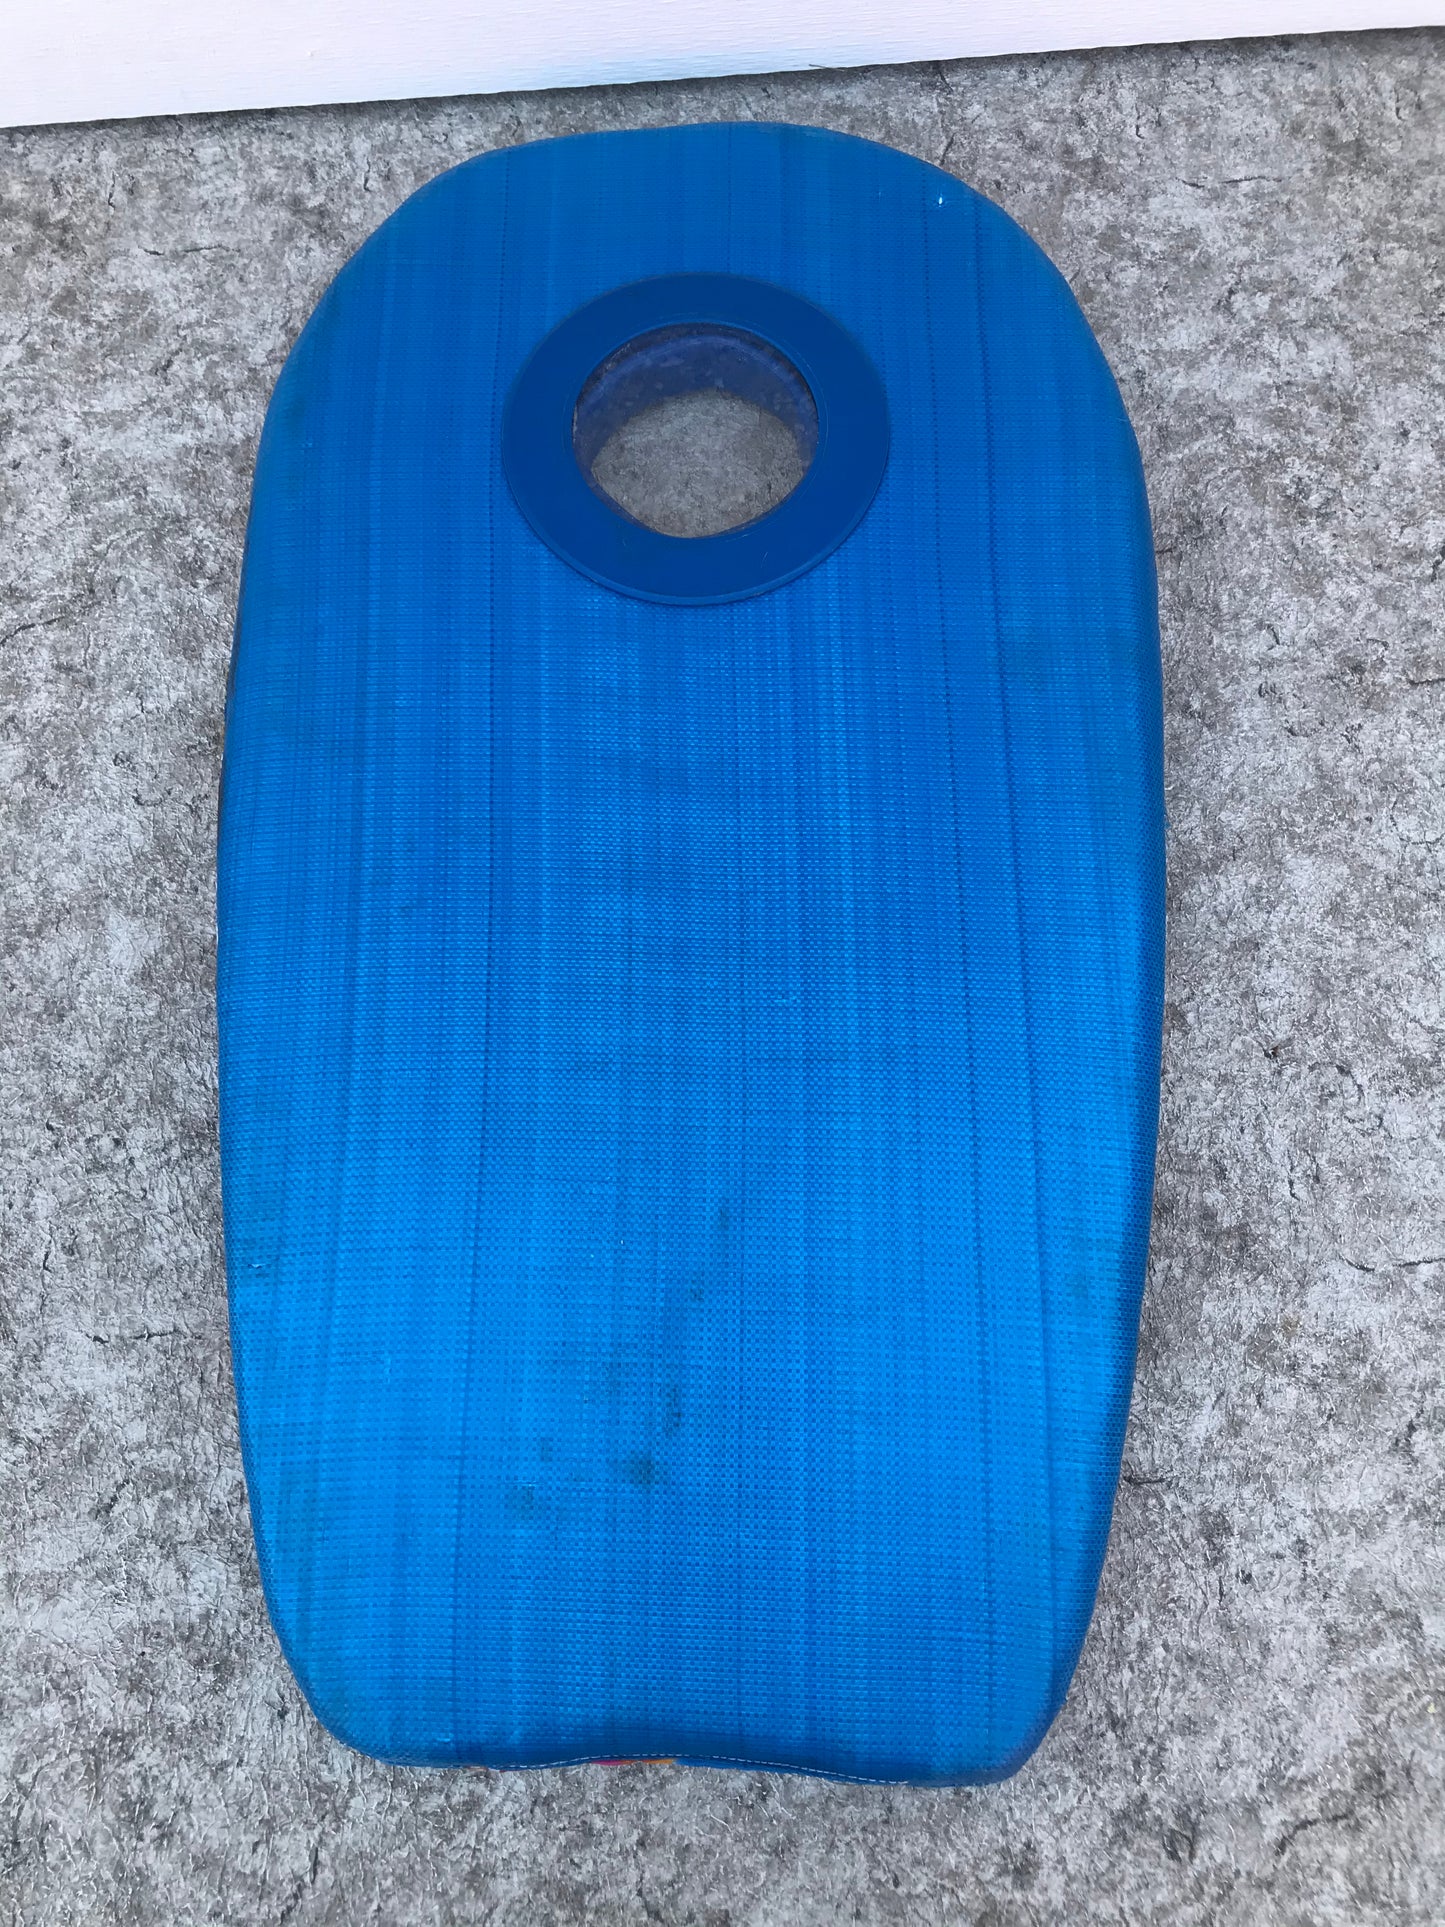 Surf Bodyboard  Boogie Board With Viewing Window Blue Hawaii 32 x 18 inch Smaller Minor Wear